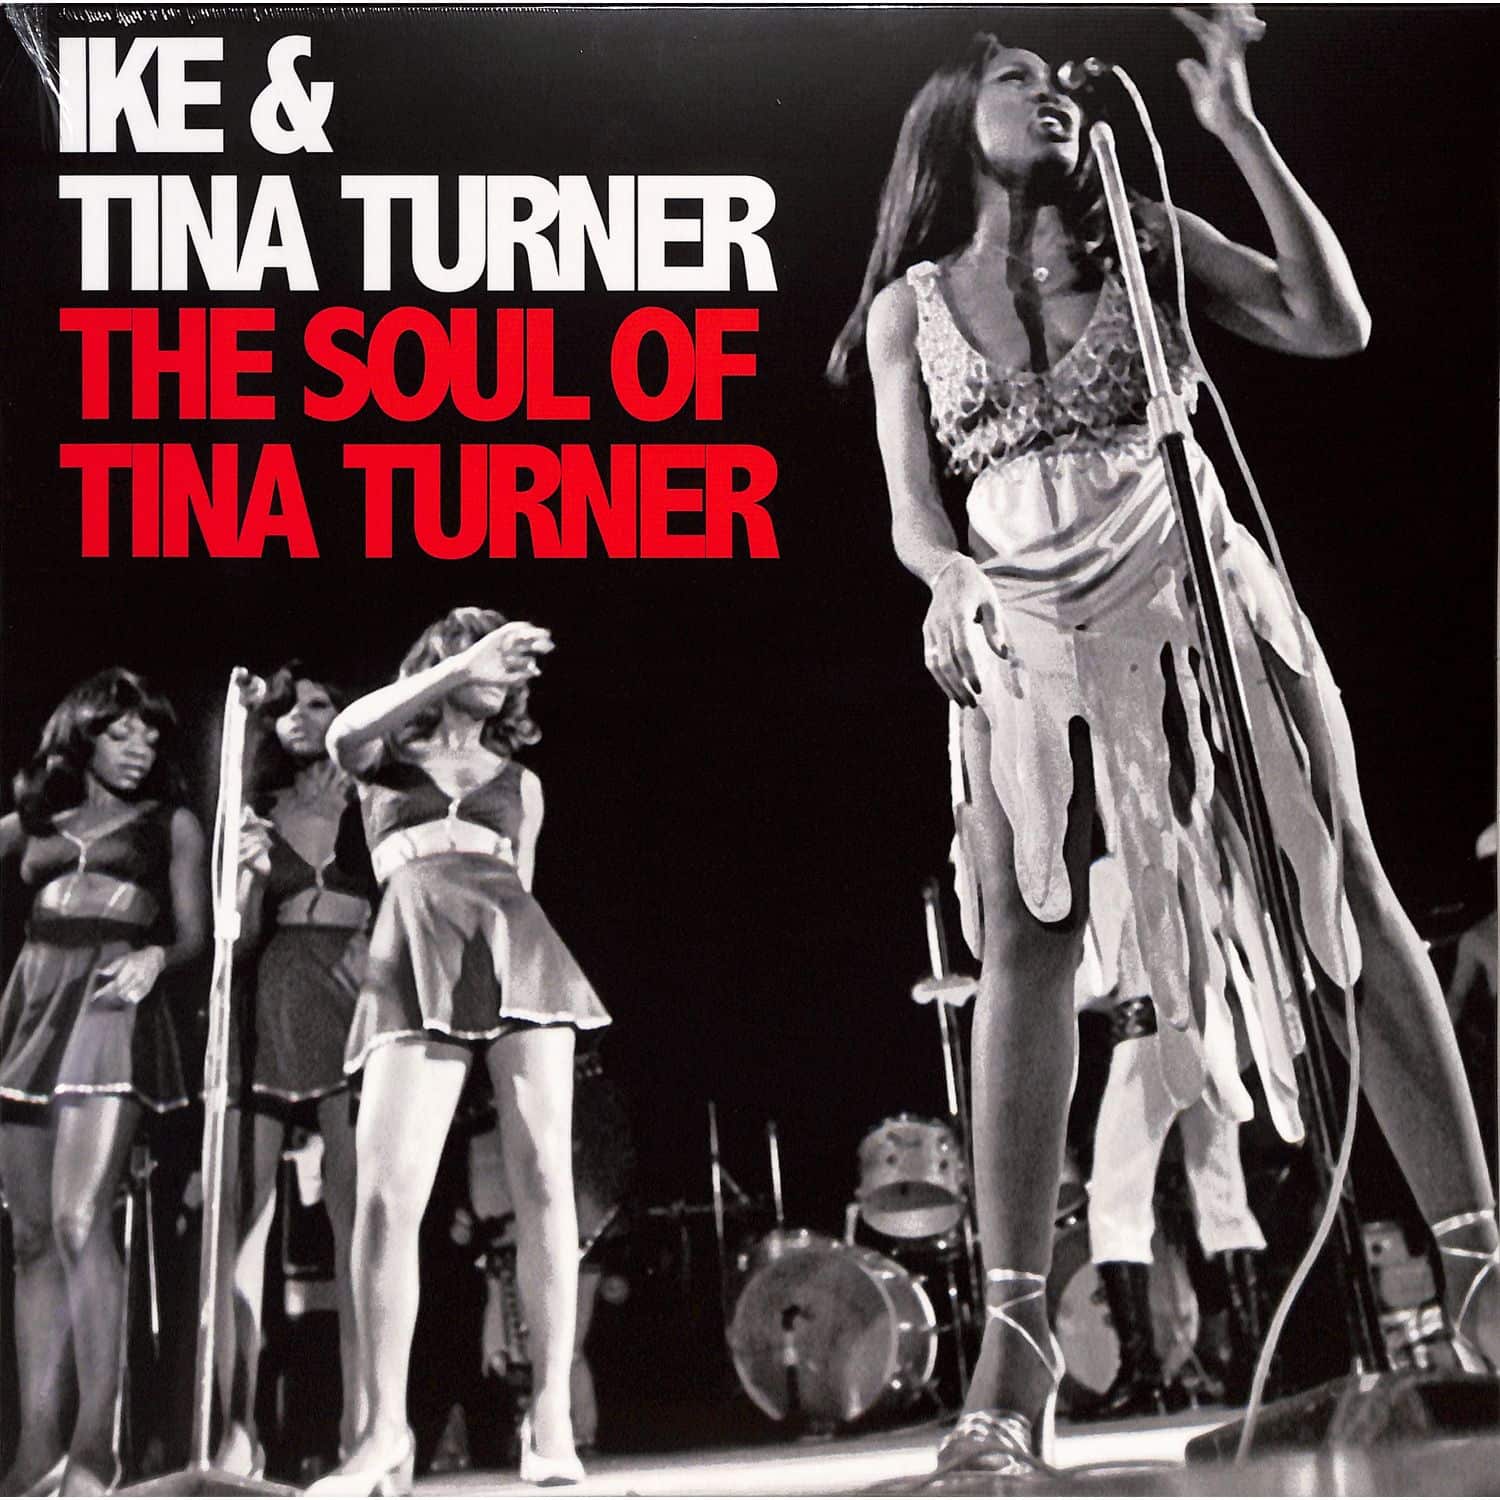 Ike & Tina Turner - THE SOUL OF TINA TURNER 